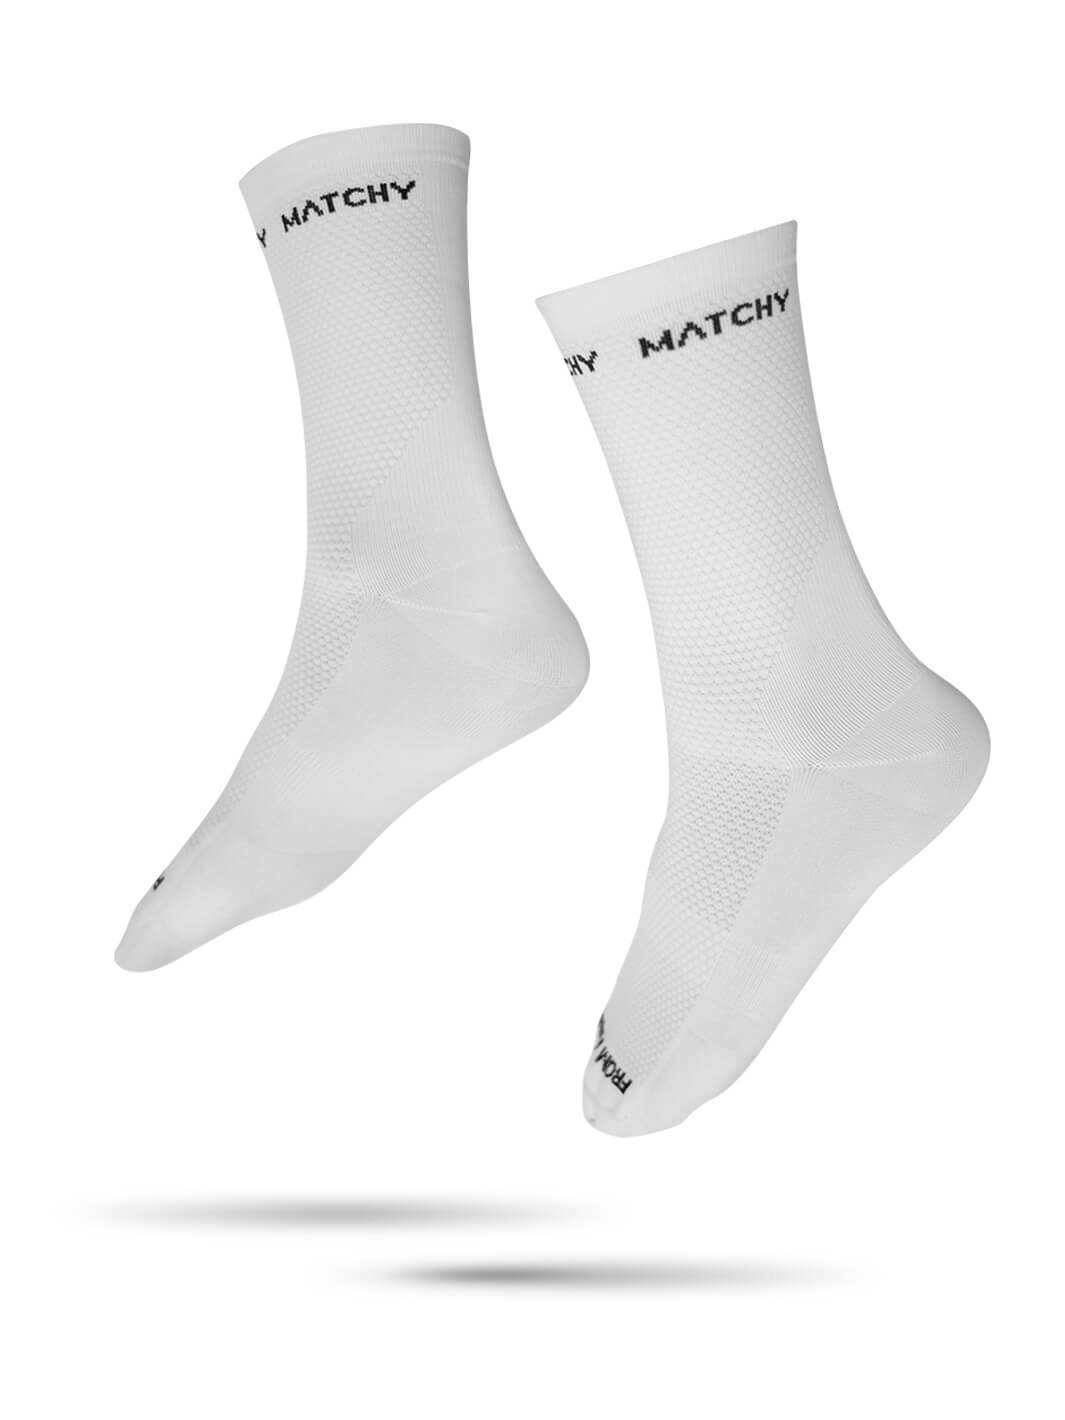 White Socks - Matchy